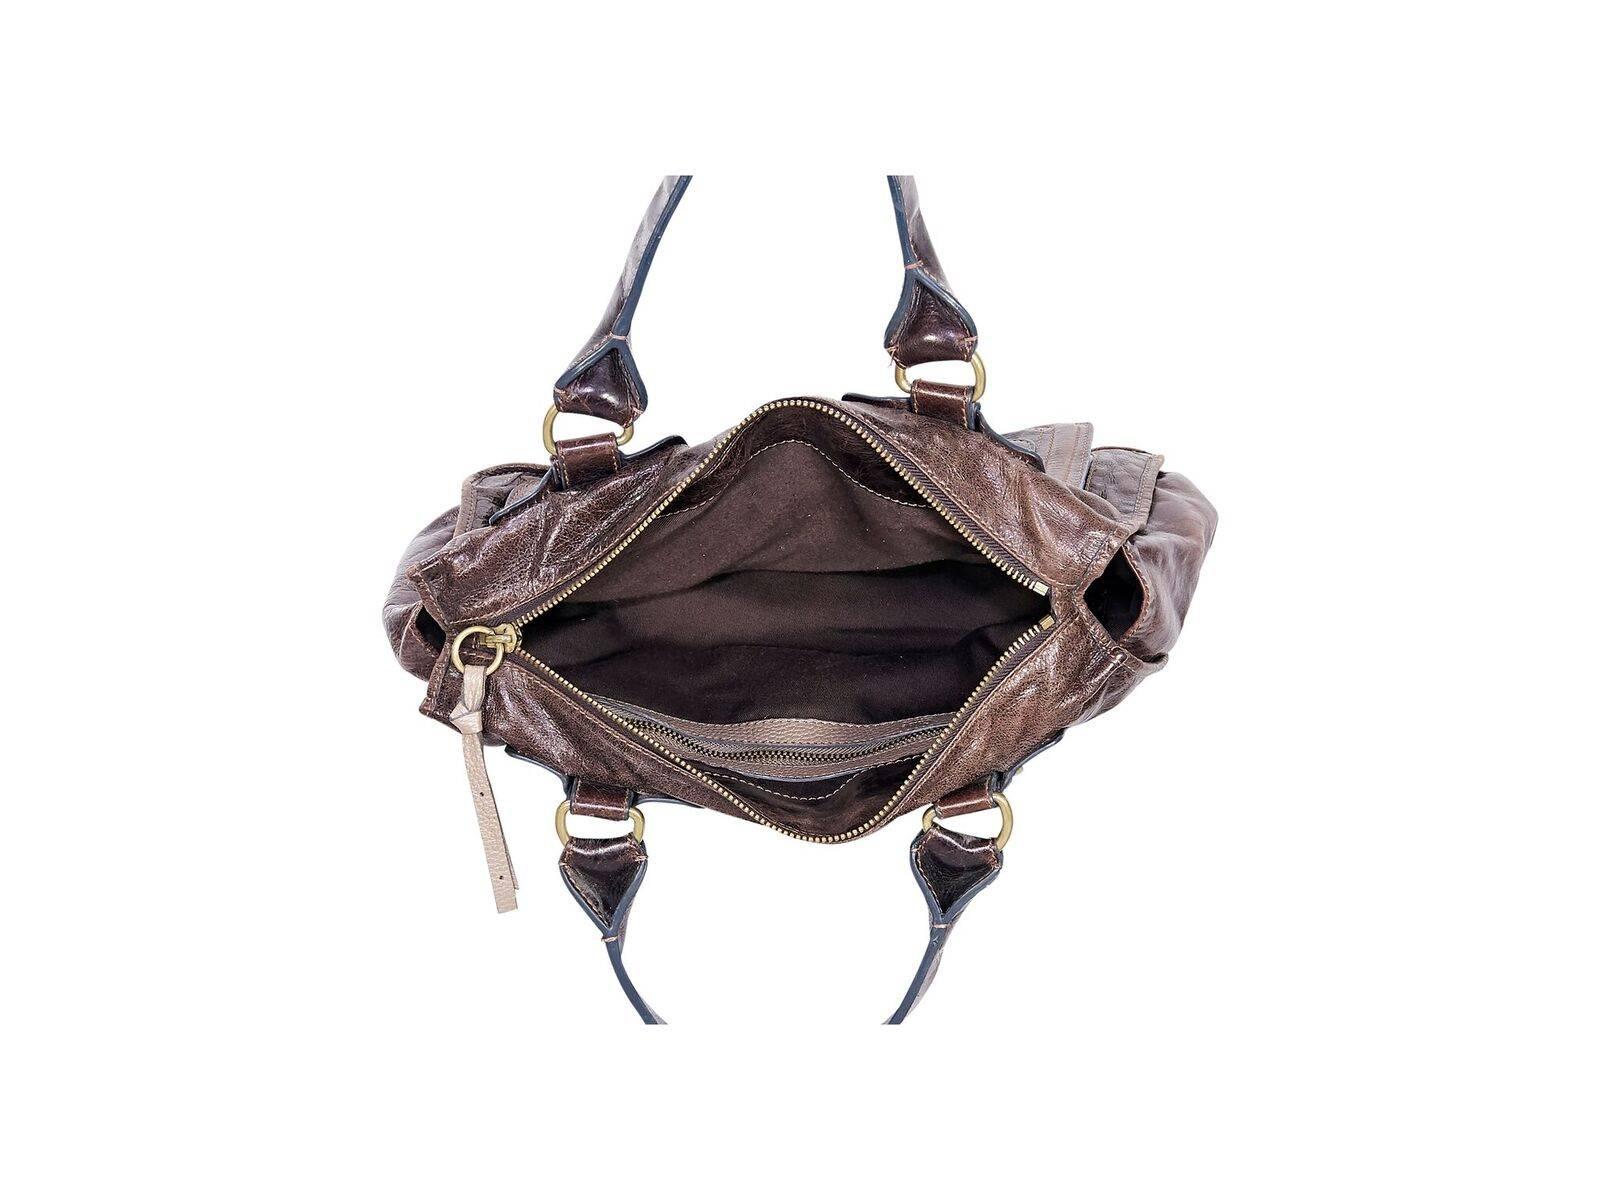 Product details:  Vintage brown leather shoulder bag by Chloe.  Dual shoulder straps.  Top zip closure.  Lined interior with inner zip pocket.  Front exterior dual zip pocket.  Goldtone hardware.  15